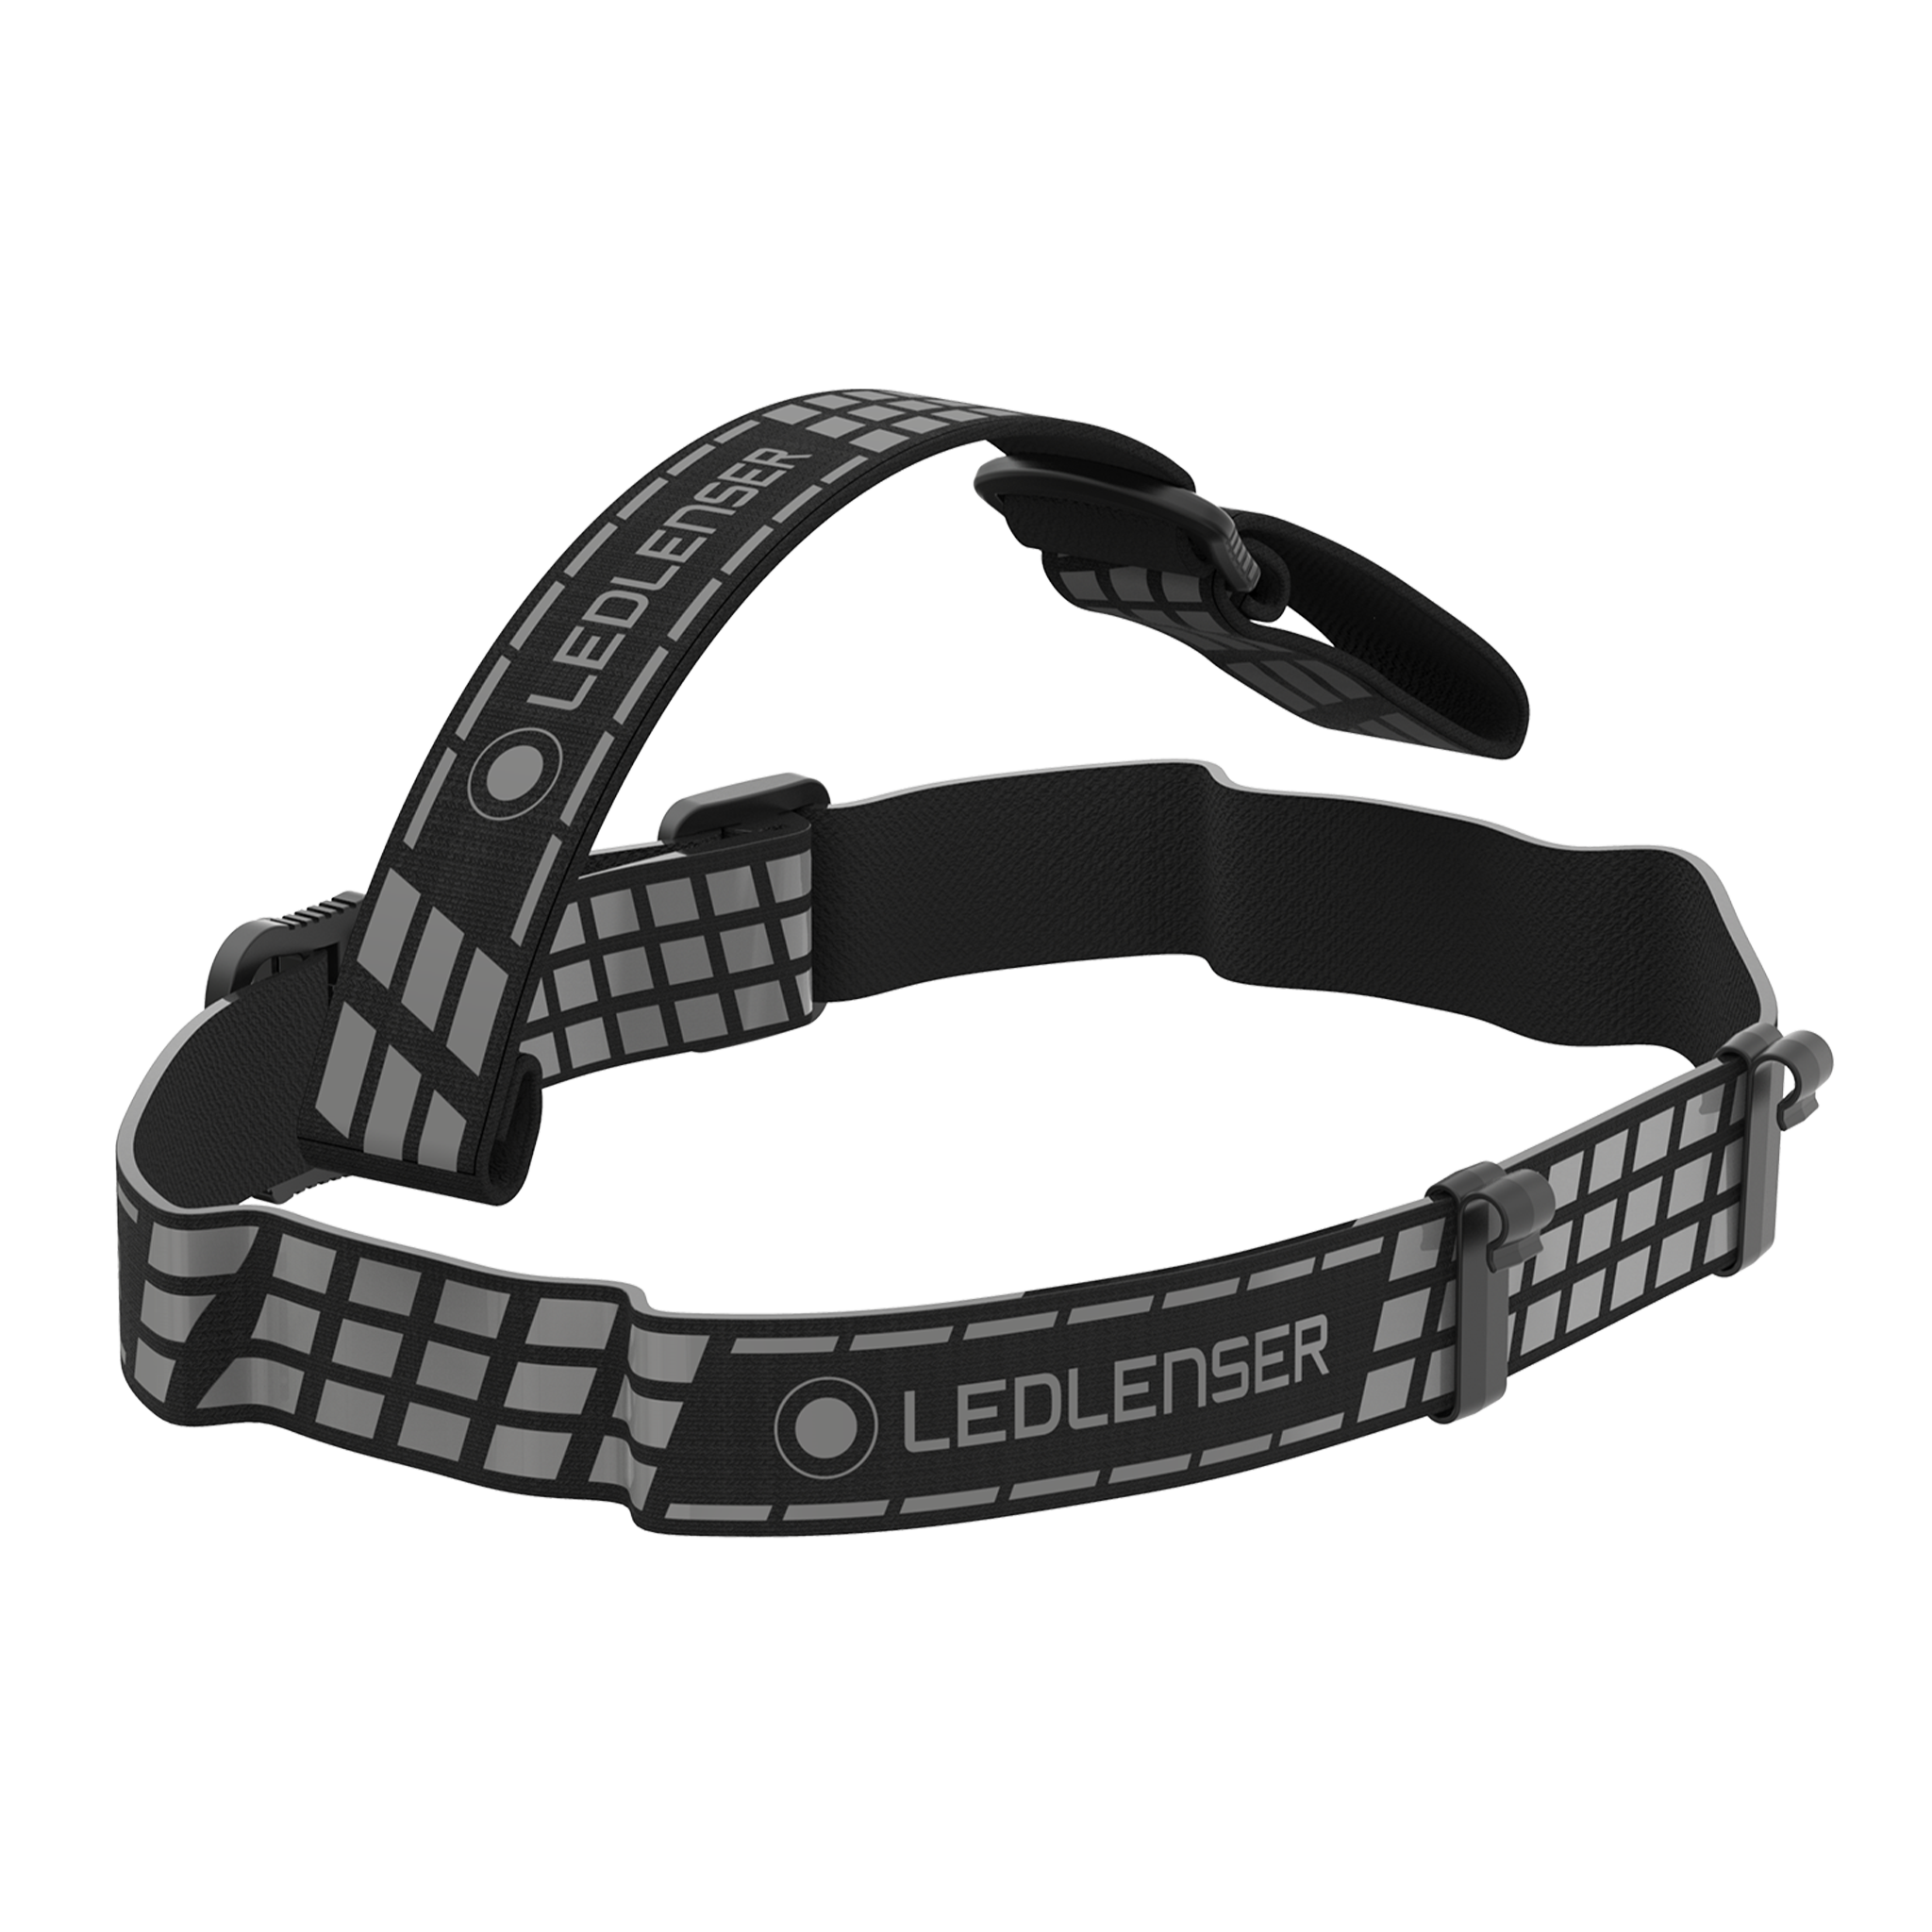 Replacement Ledlenser Branded Headband & Overhead-band - Signature Series headlamps